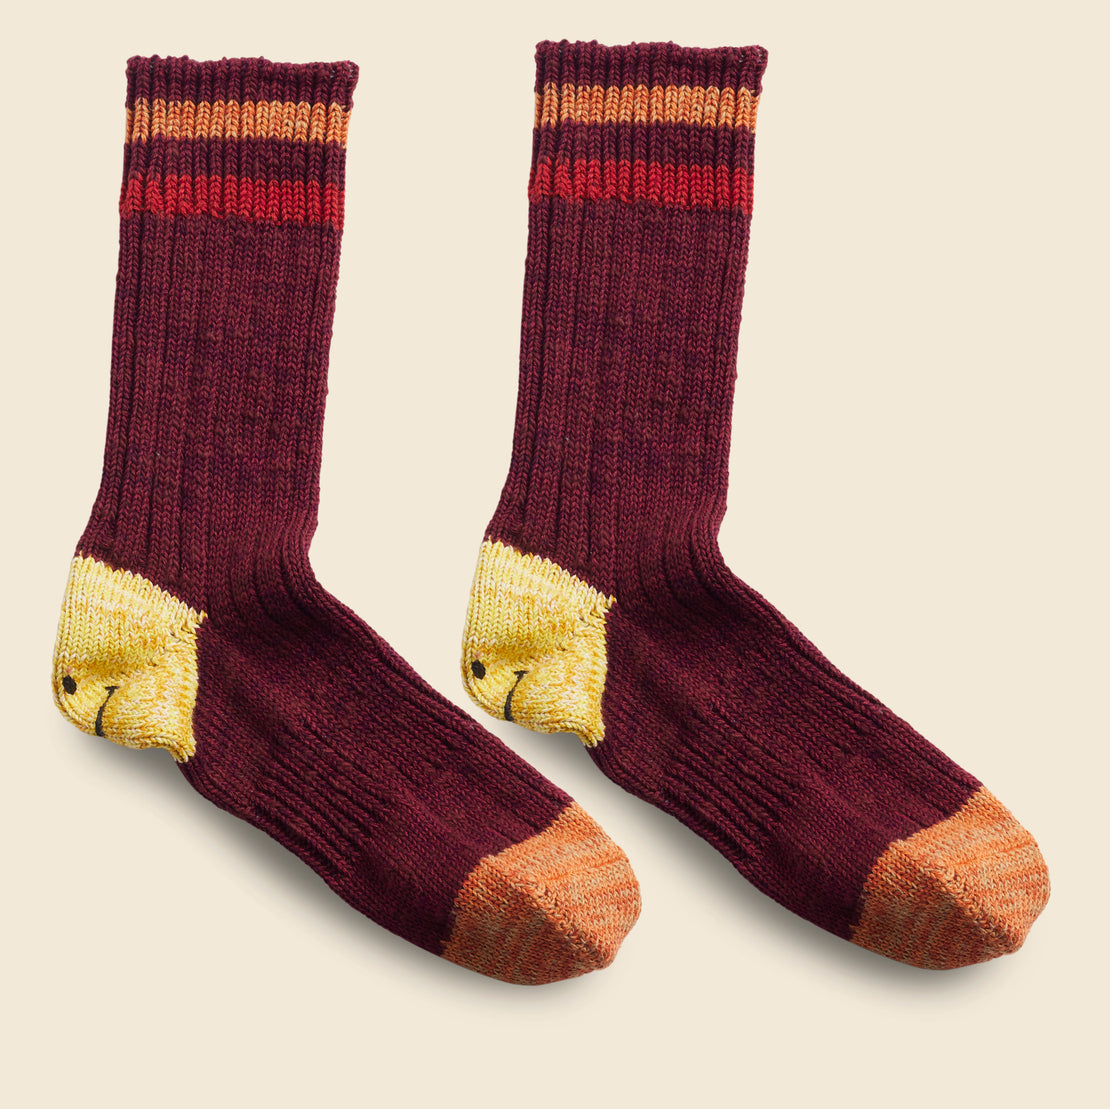 60 Yarns Grandrelle Ivy Smilie Heel Socks - Burgundy - Kapital - STAG Provisions - W - Accessories - Socks